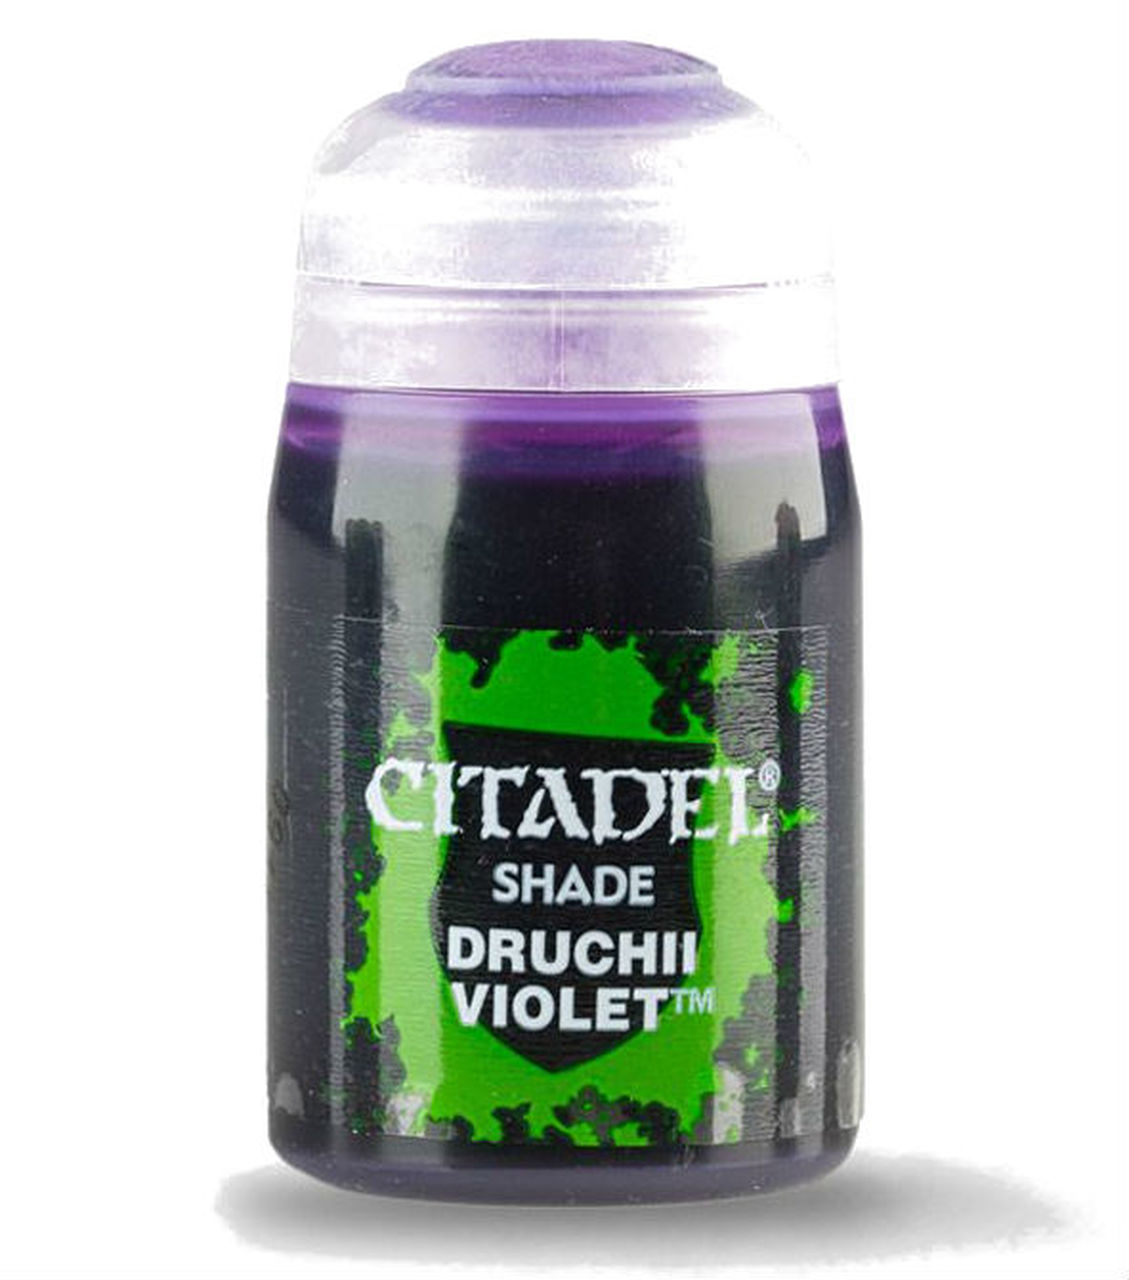 Citadel Paint: Shade - Druchii Violet 24ml